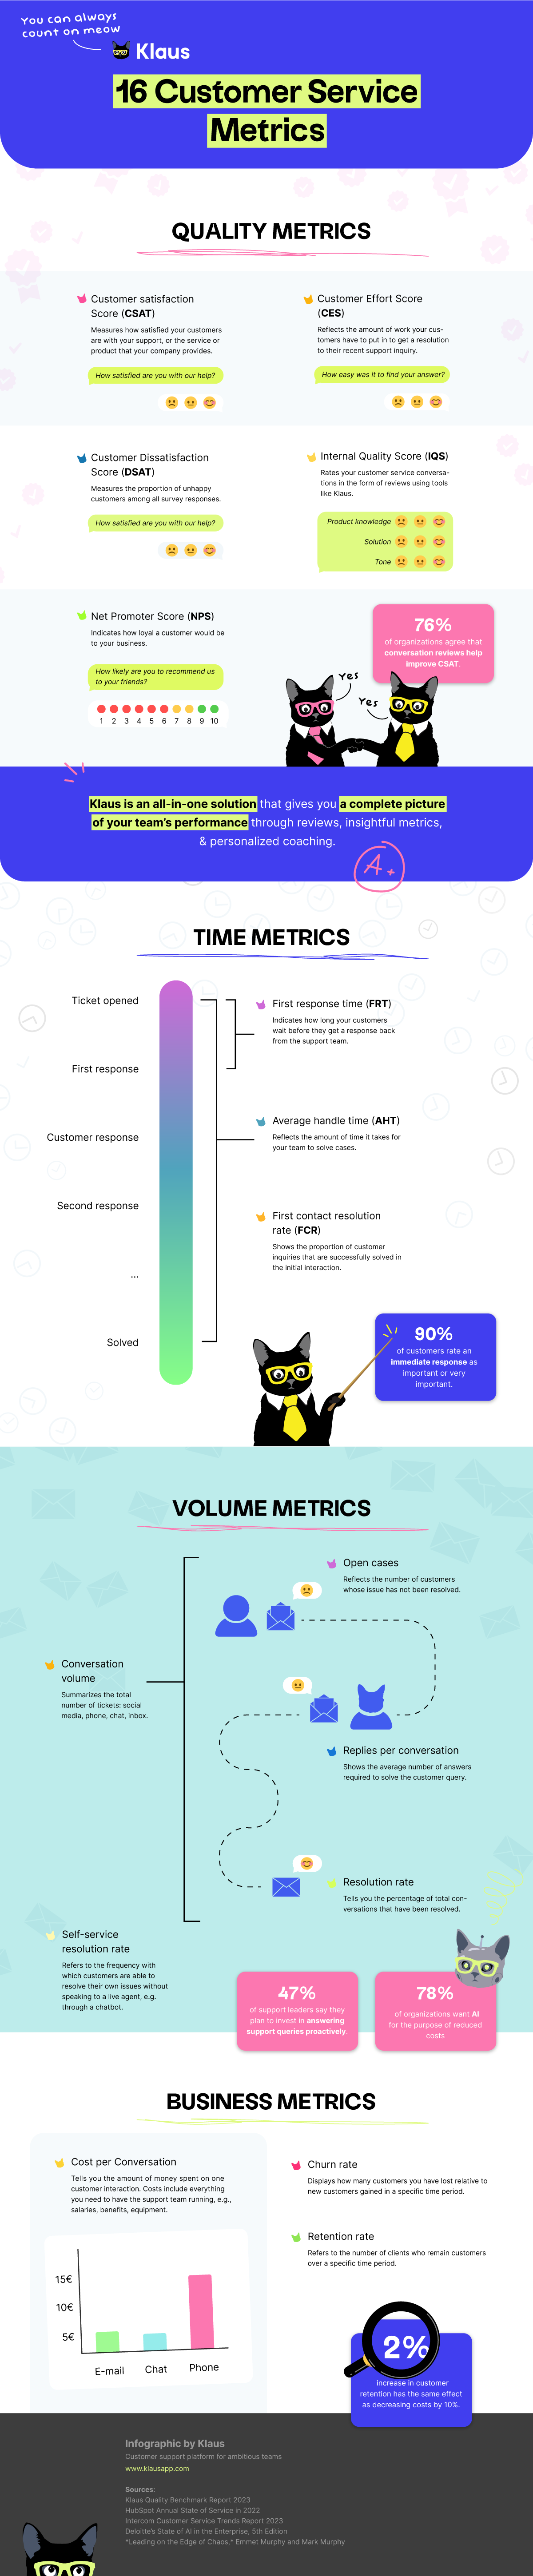 Top Customer Service Metrics infographic